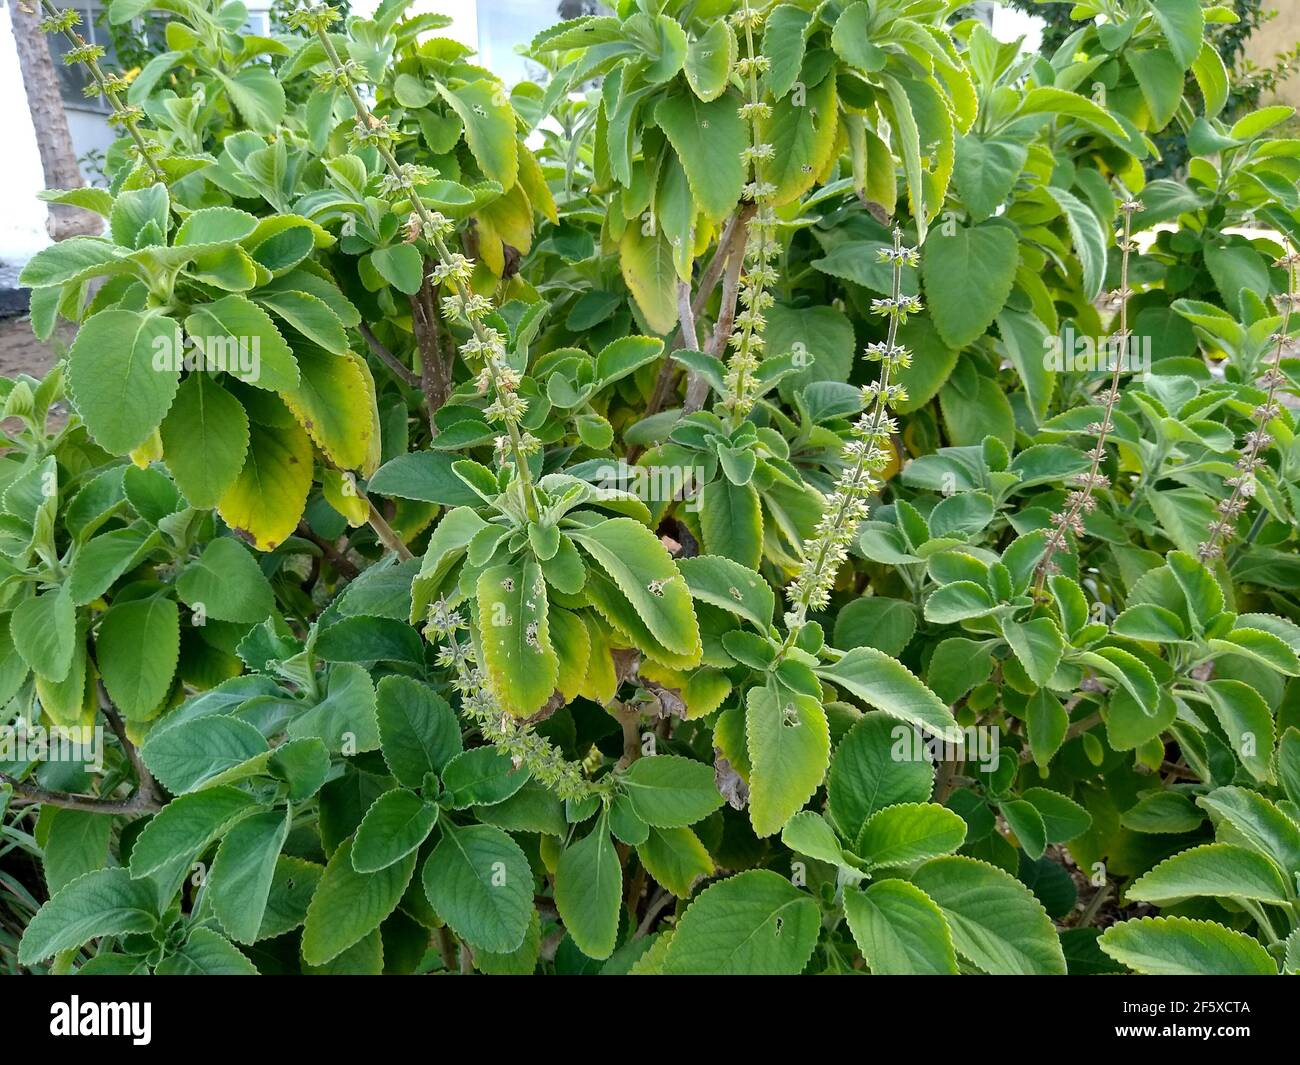 salvador, bahia, brazil - november 26, 2020: plectranthus barbatus plant, known by the taxonomic synonym or garden boldo, seen in the city of Salvador Stock Photo